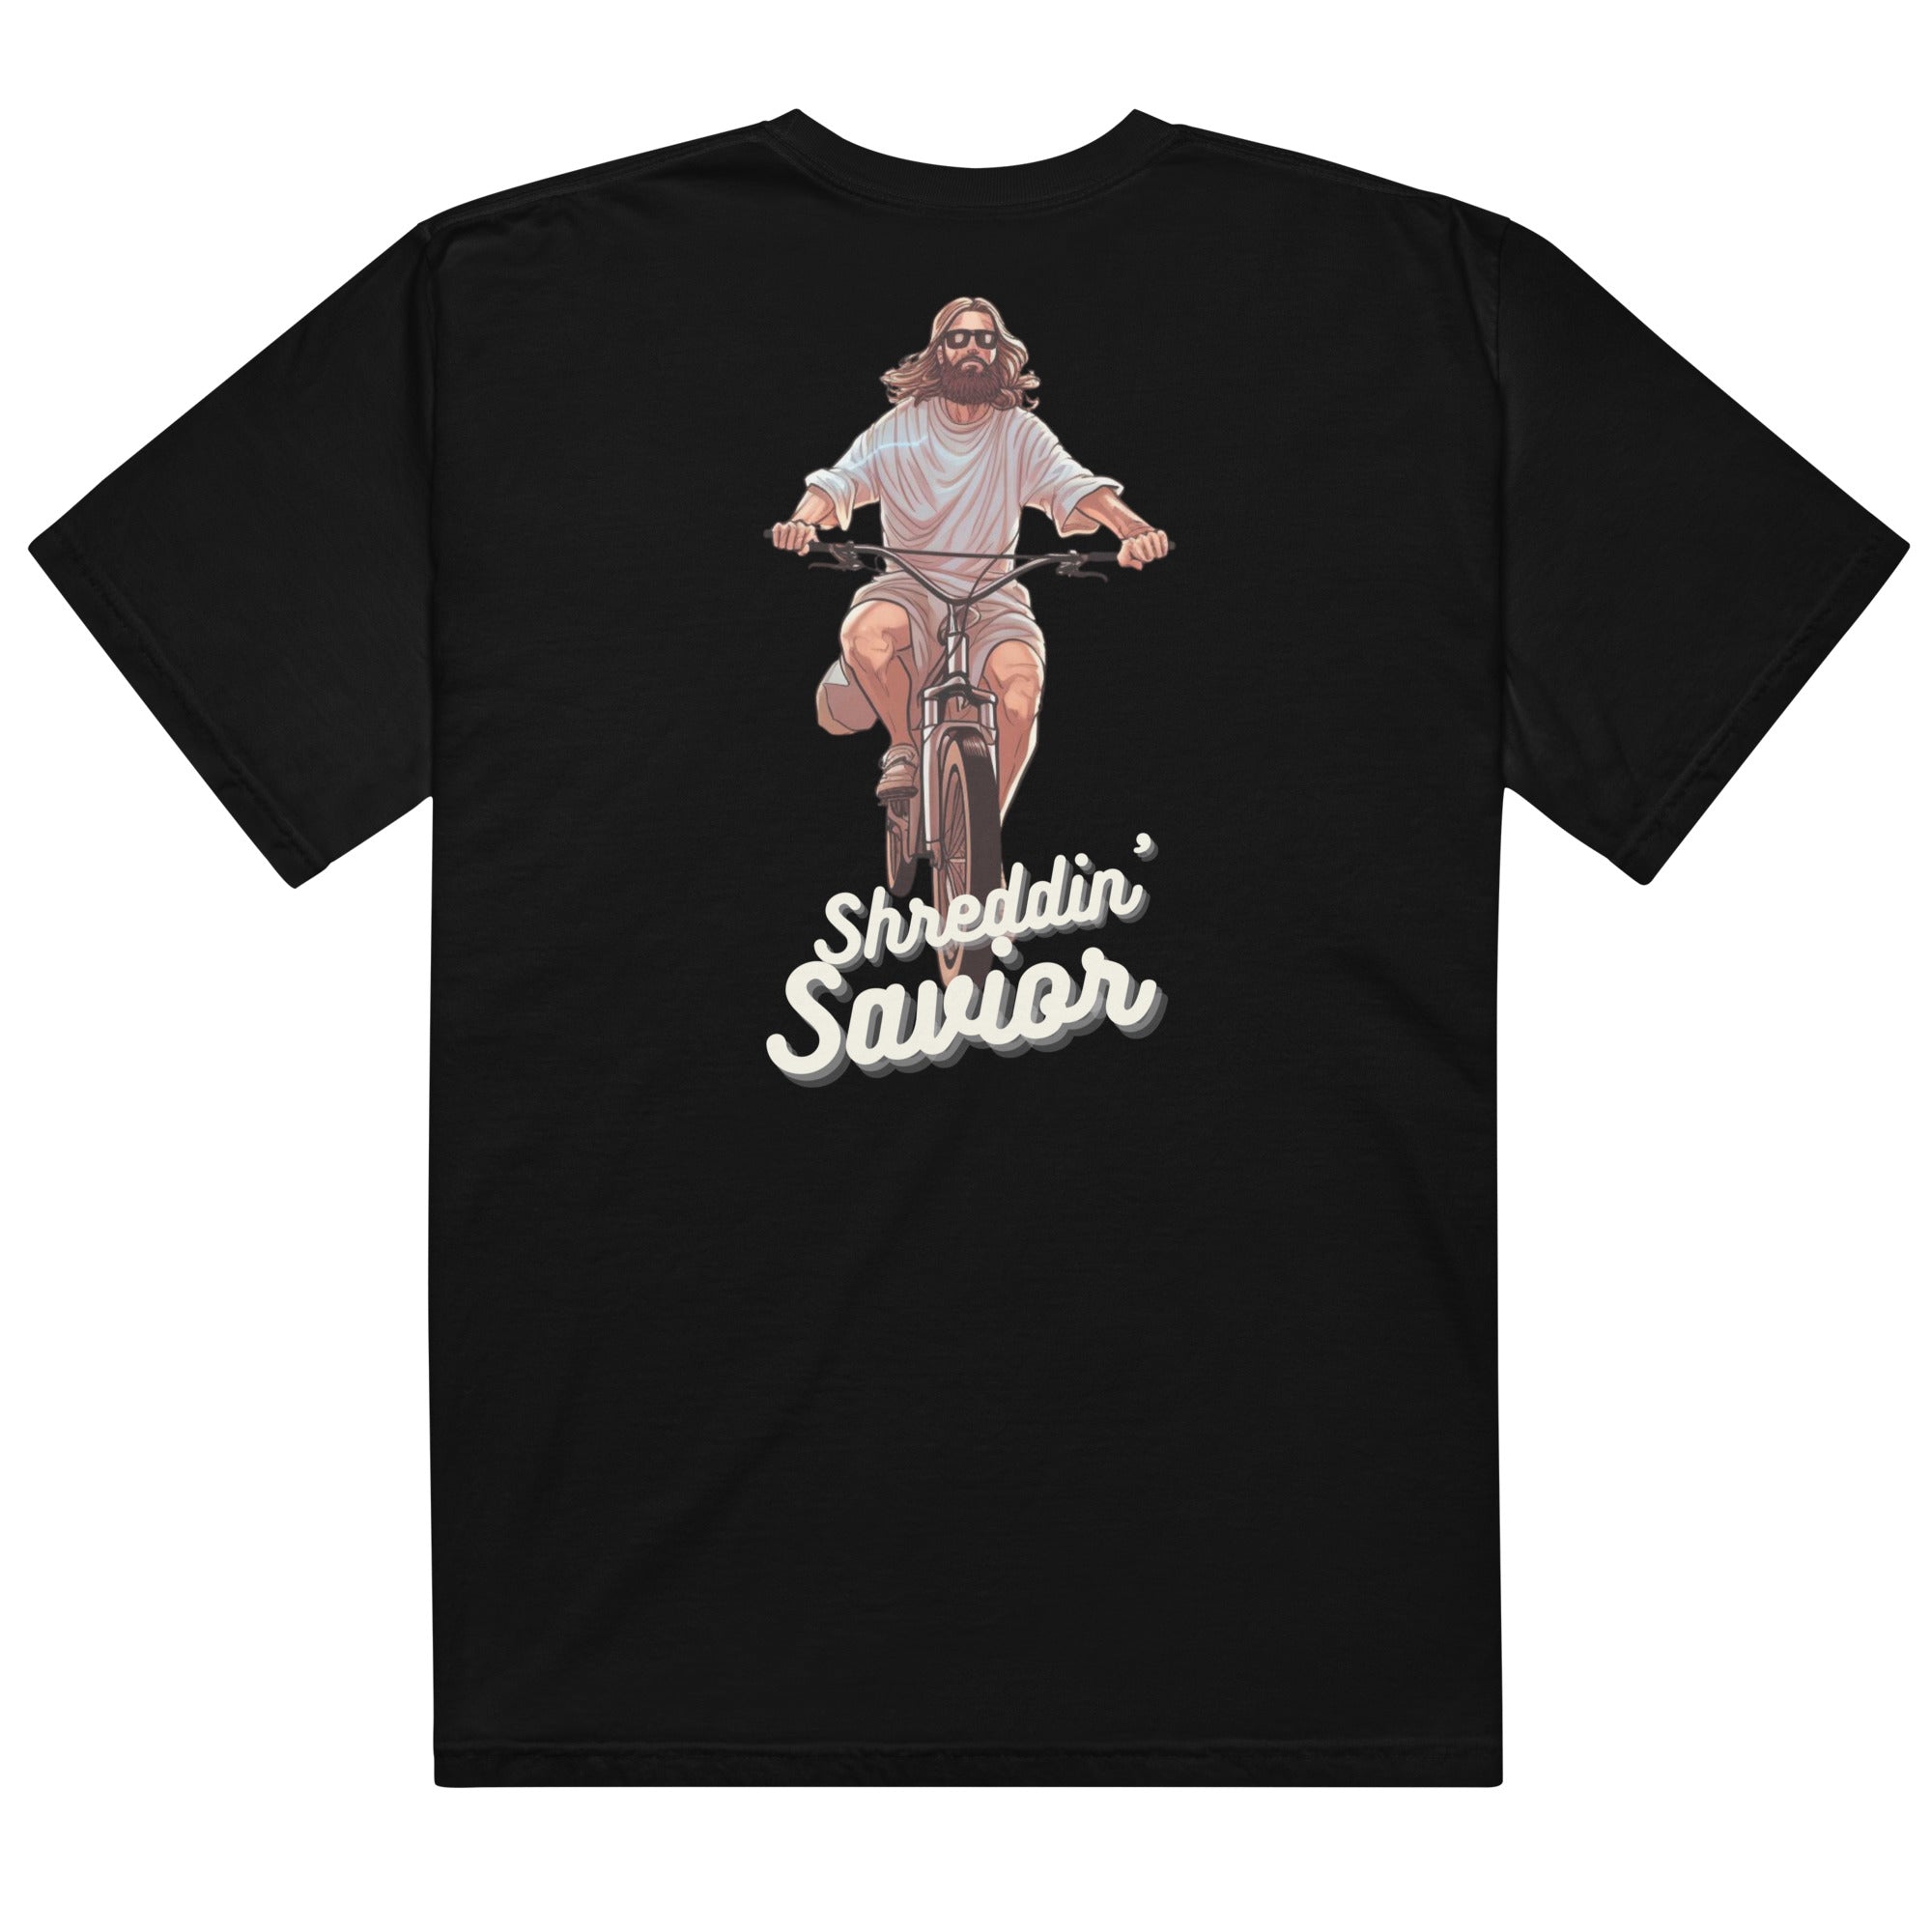 Shreddin' Savior Shirt